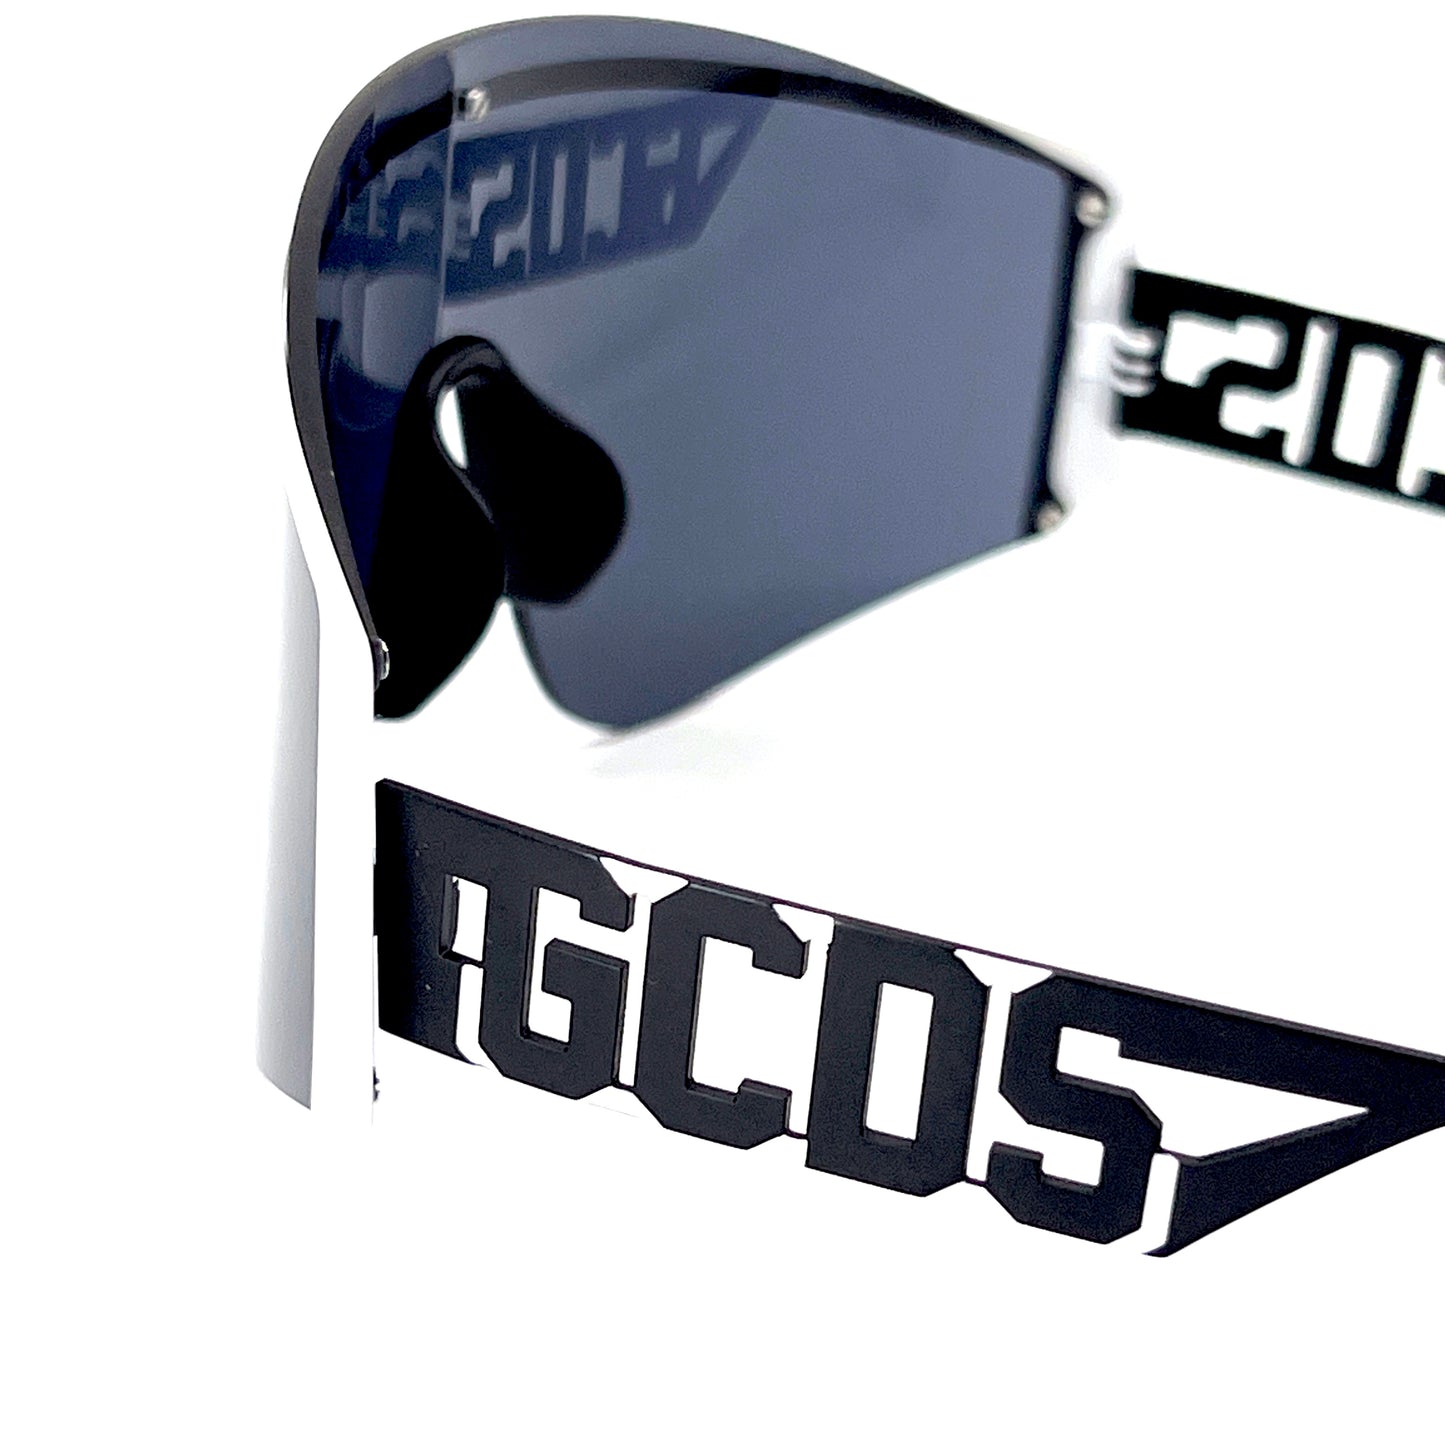 GCDS Sunglasses GD0003 24A